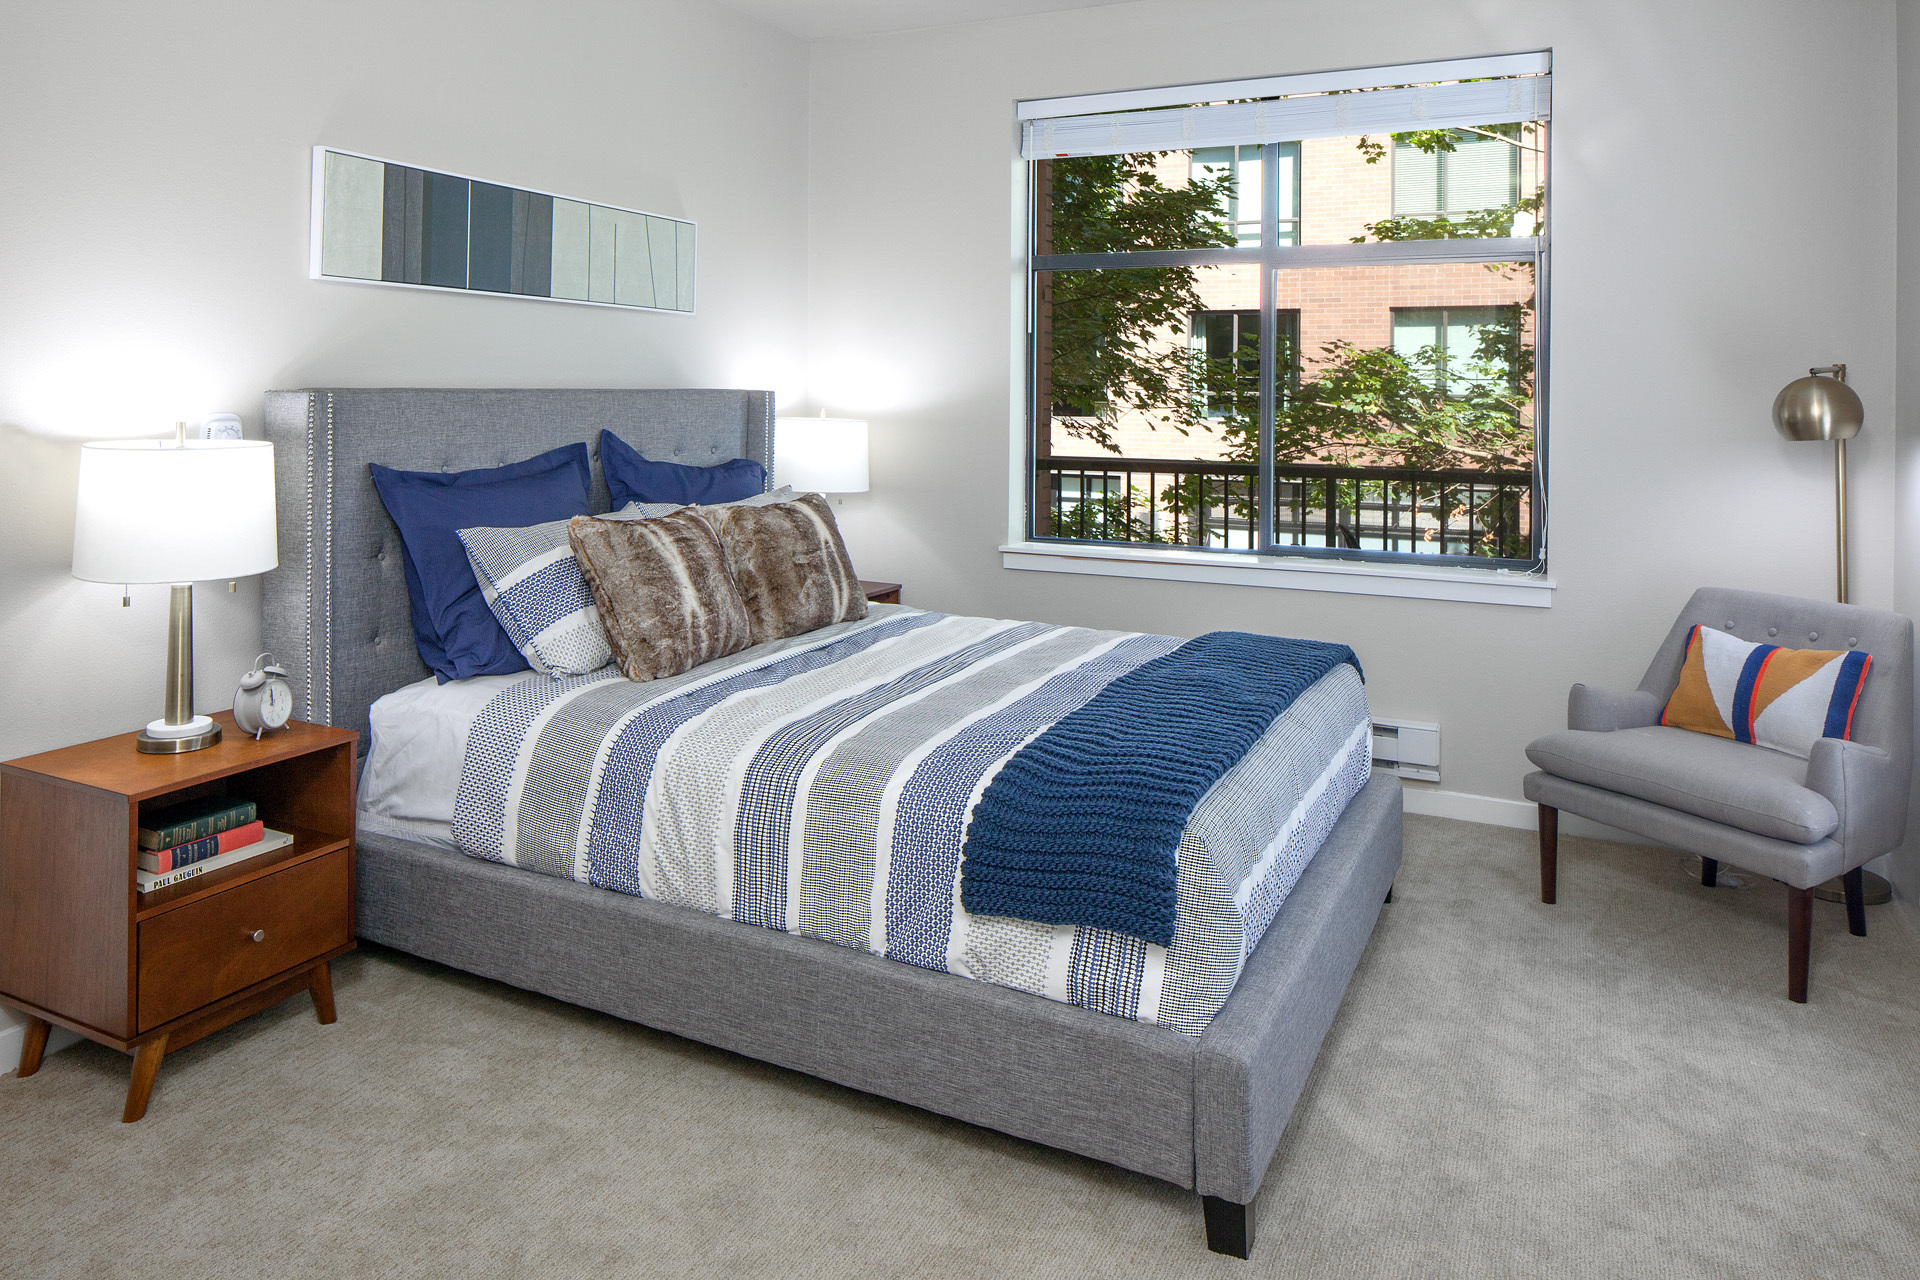 kearney portland model suite bedroom blue grey bed